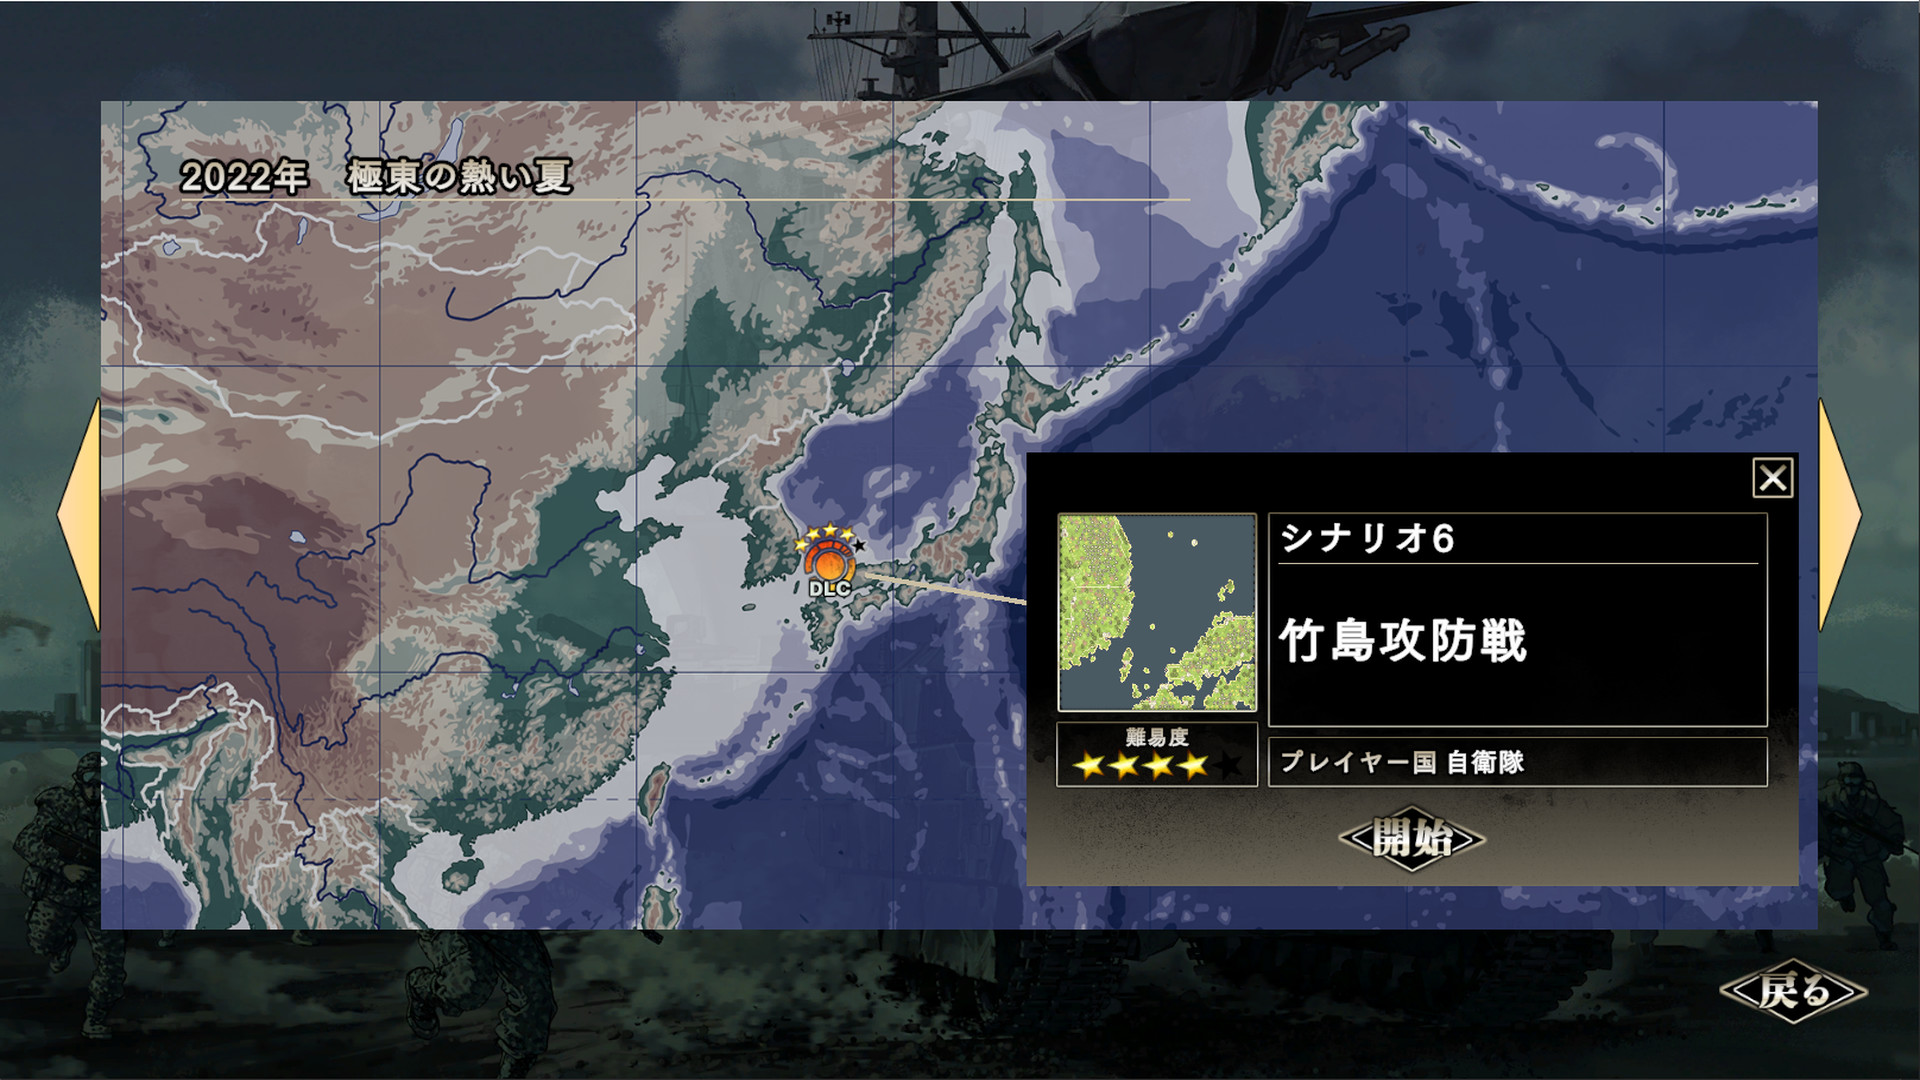 Ghost of Tsushima Windows 11/10 Theme 